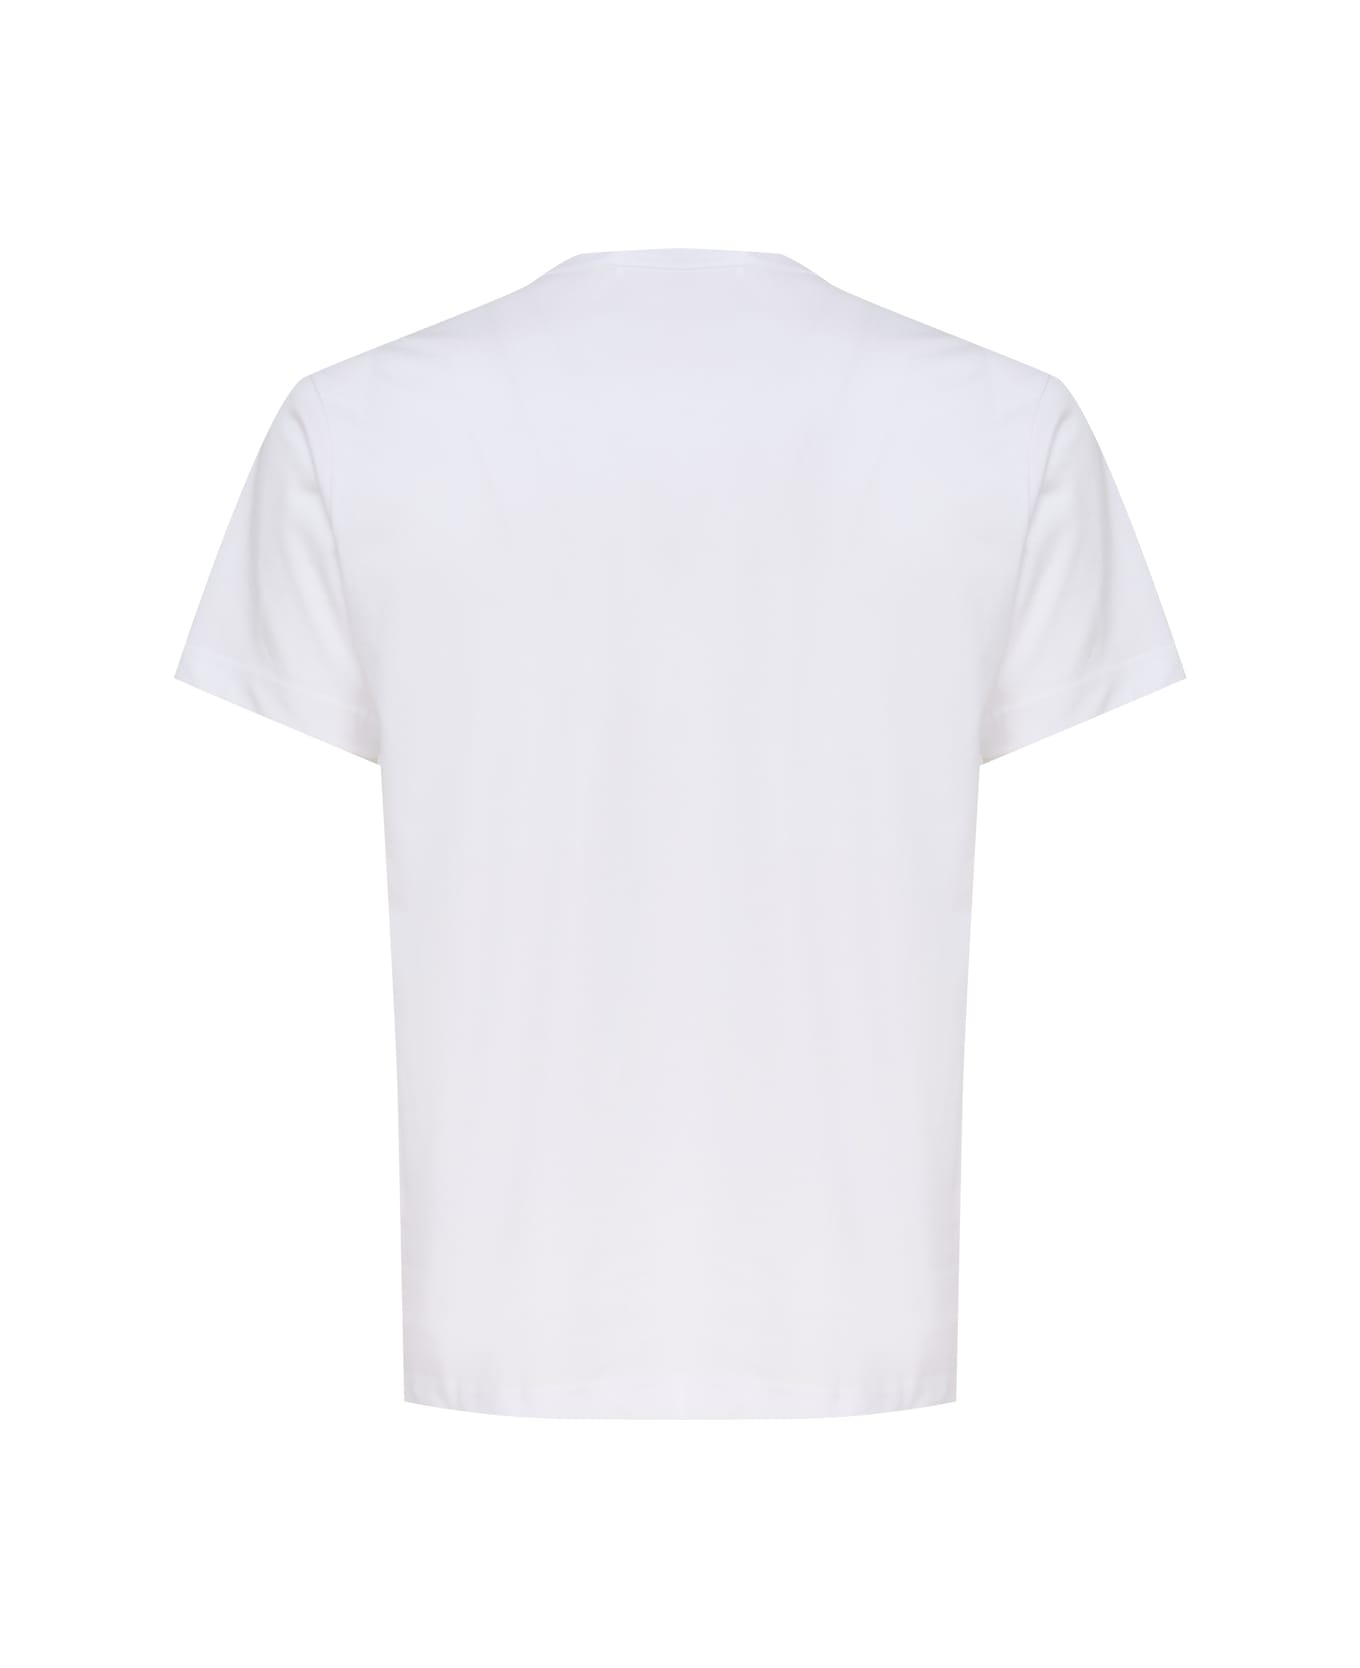 Comme des Garçons Andy Warhol T-shirt - White